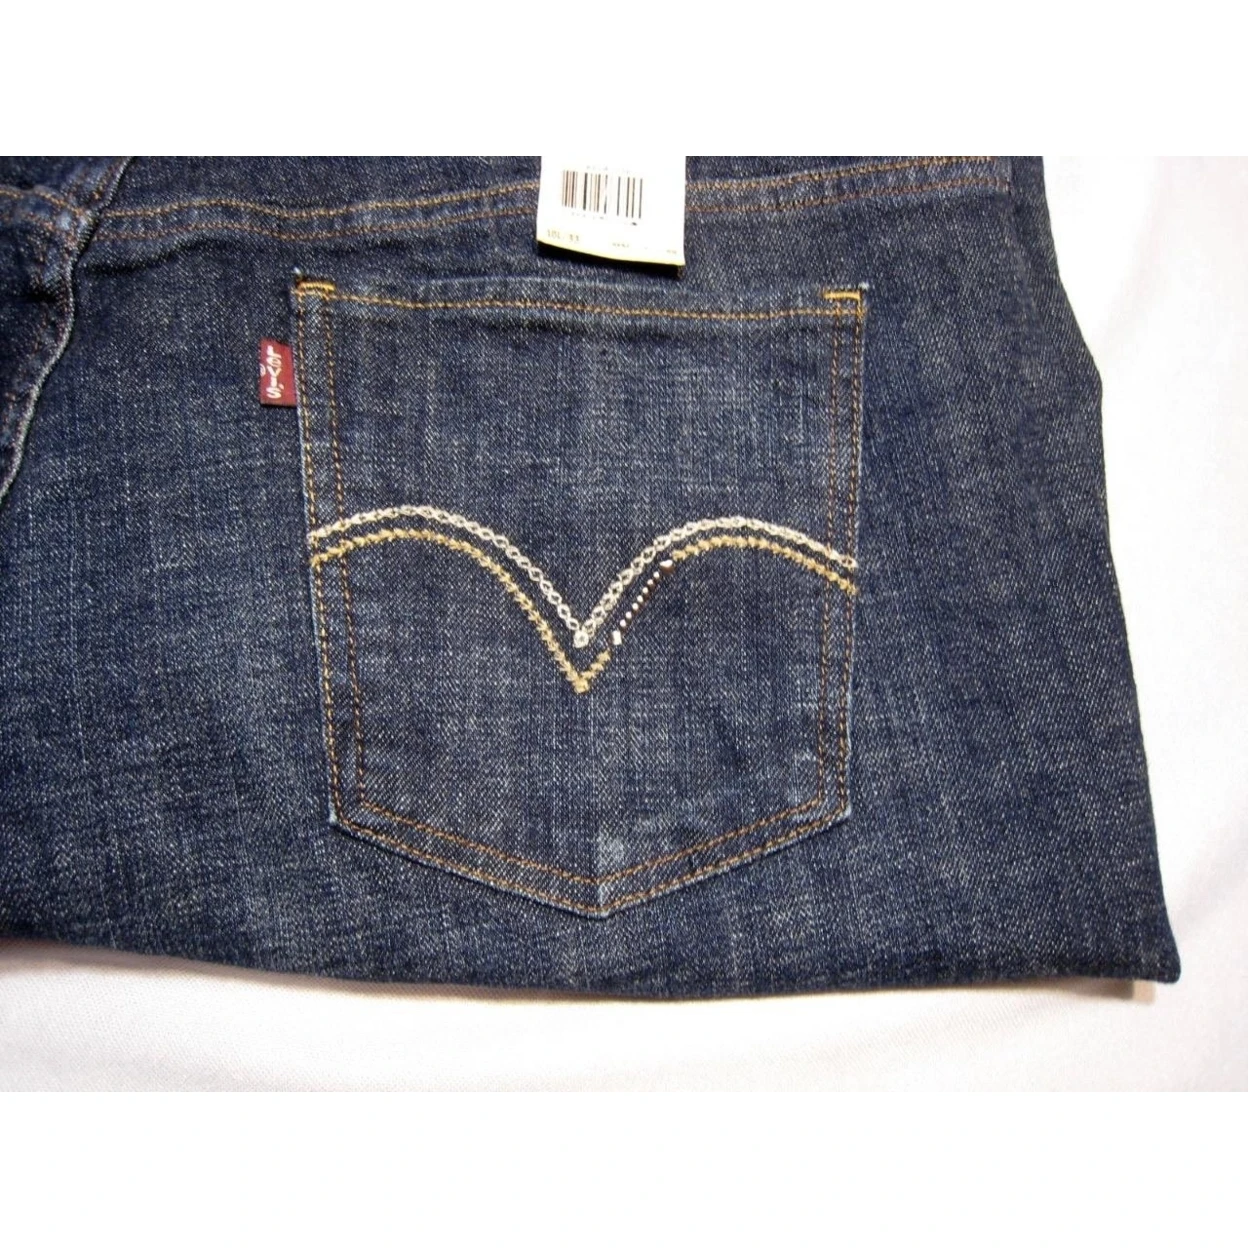 Levis 515 Boot Cut Jeans Women BootCut Jeans size 16L 38 x 33 Midrise _ -  AliExpress Mobile